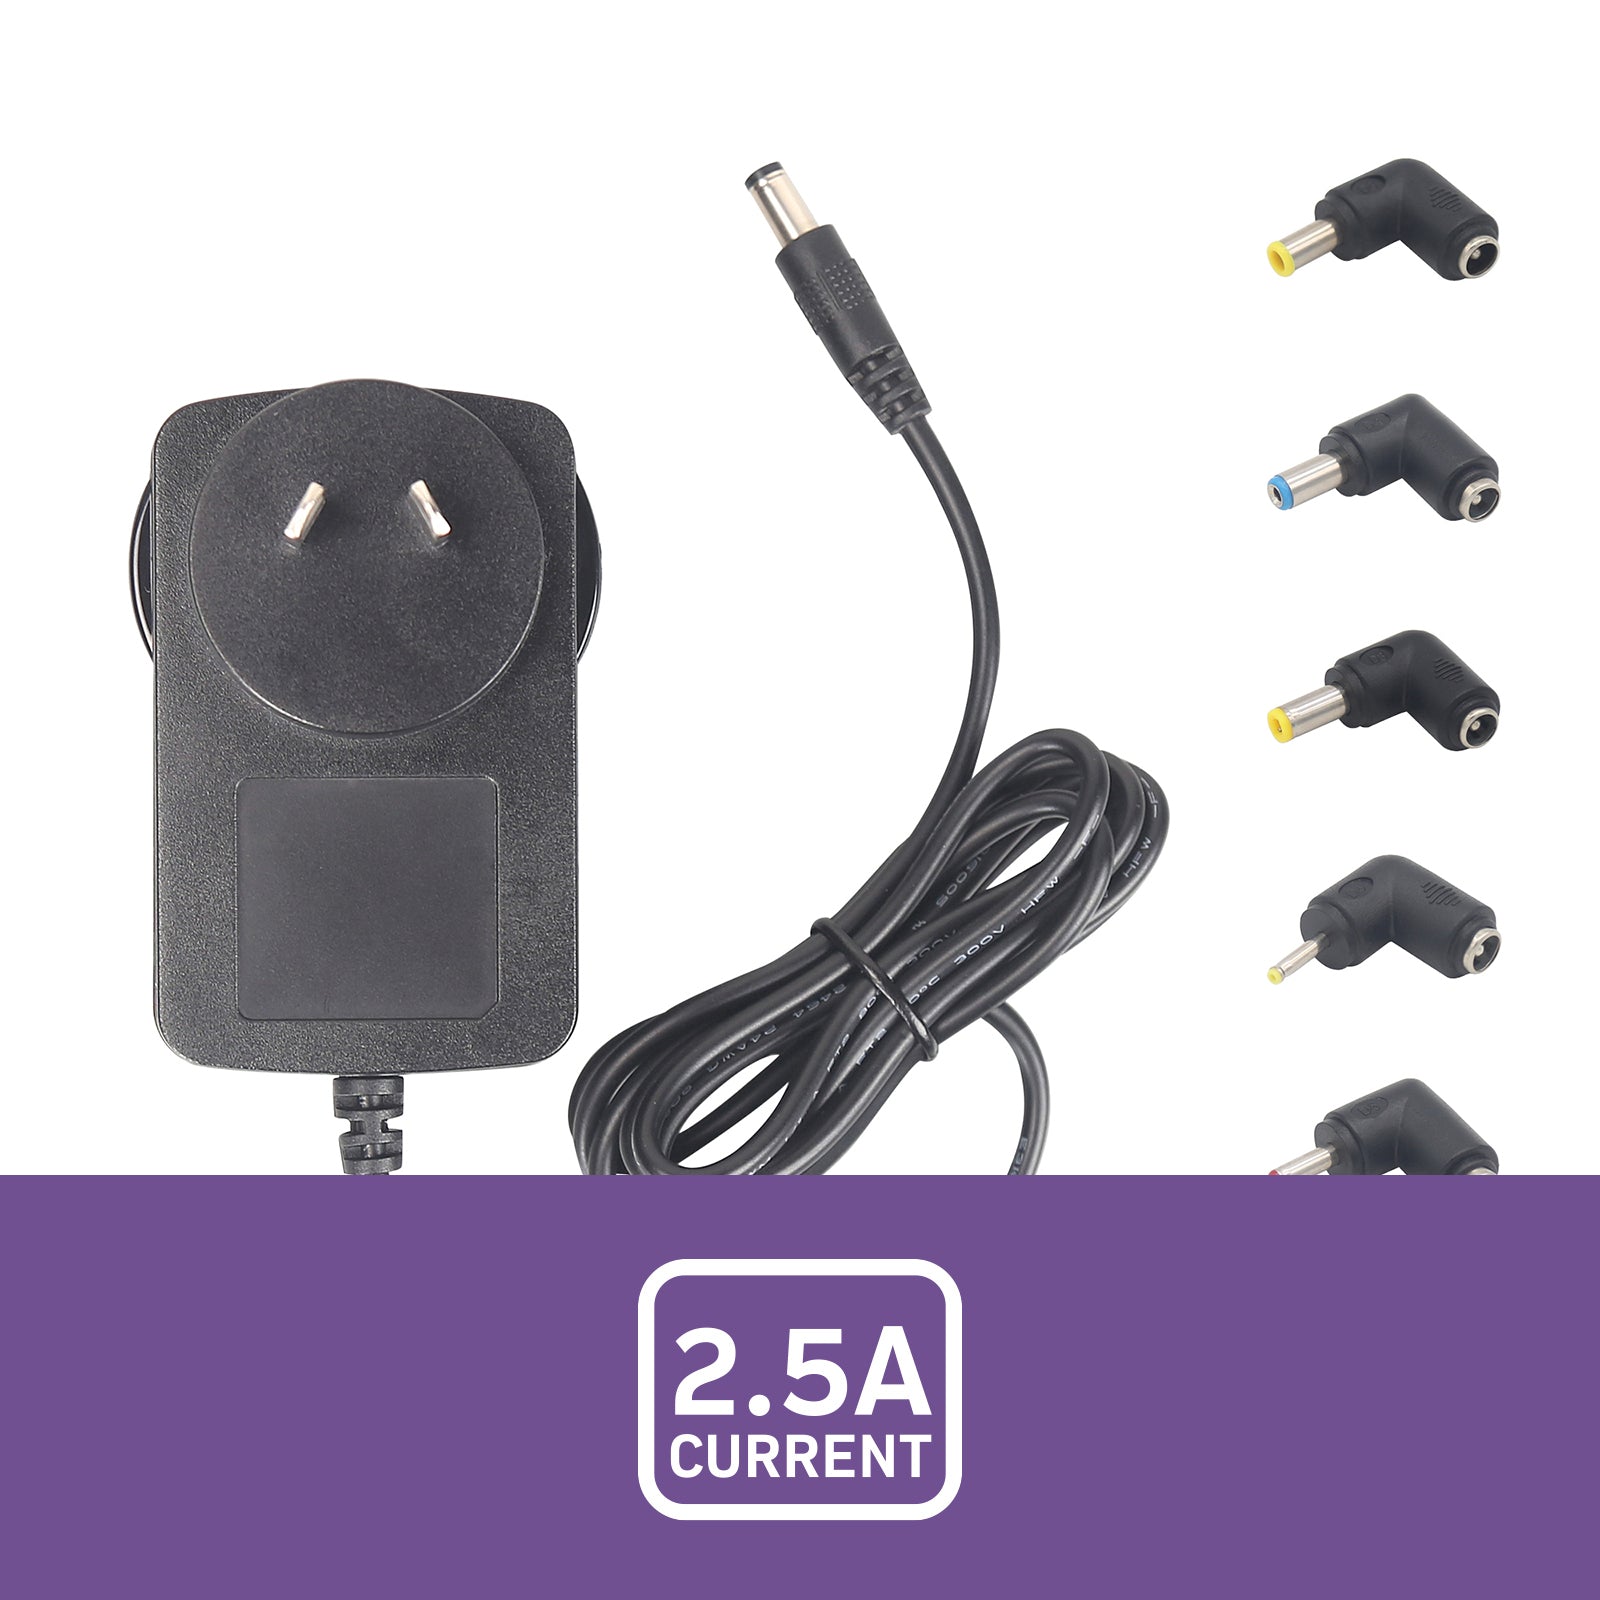 5V 2.5A Power Supply With Plug Adaptors